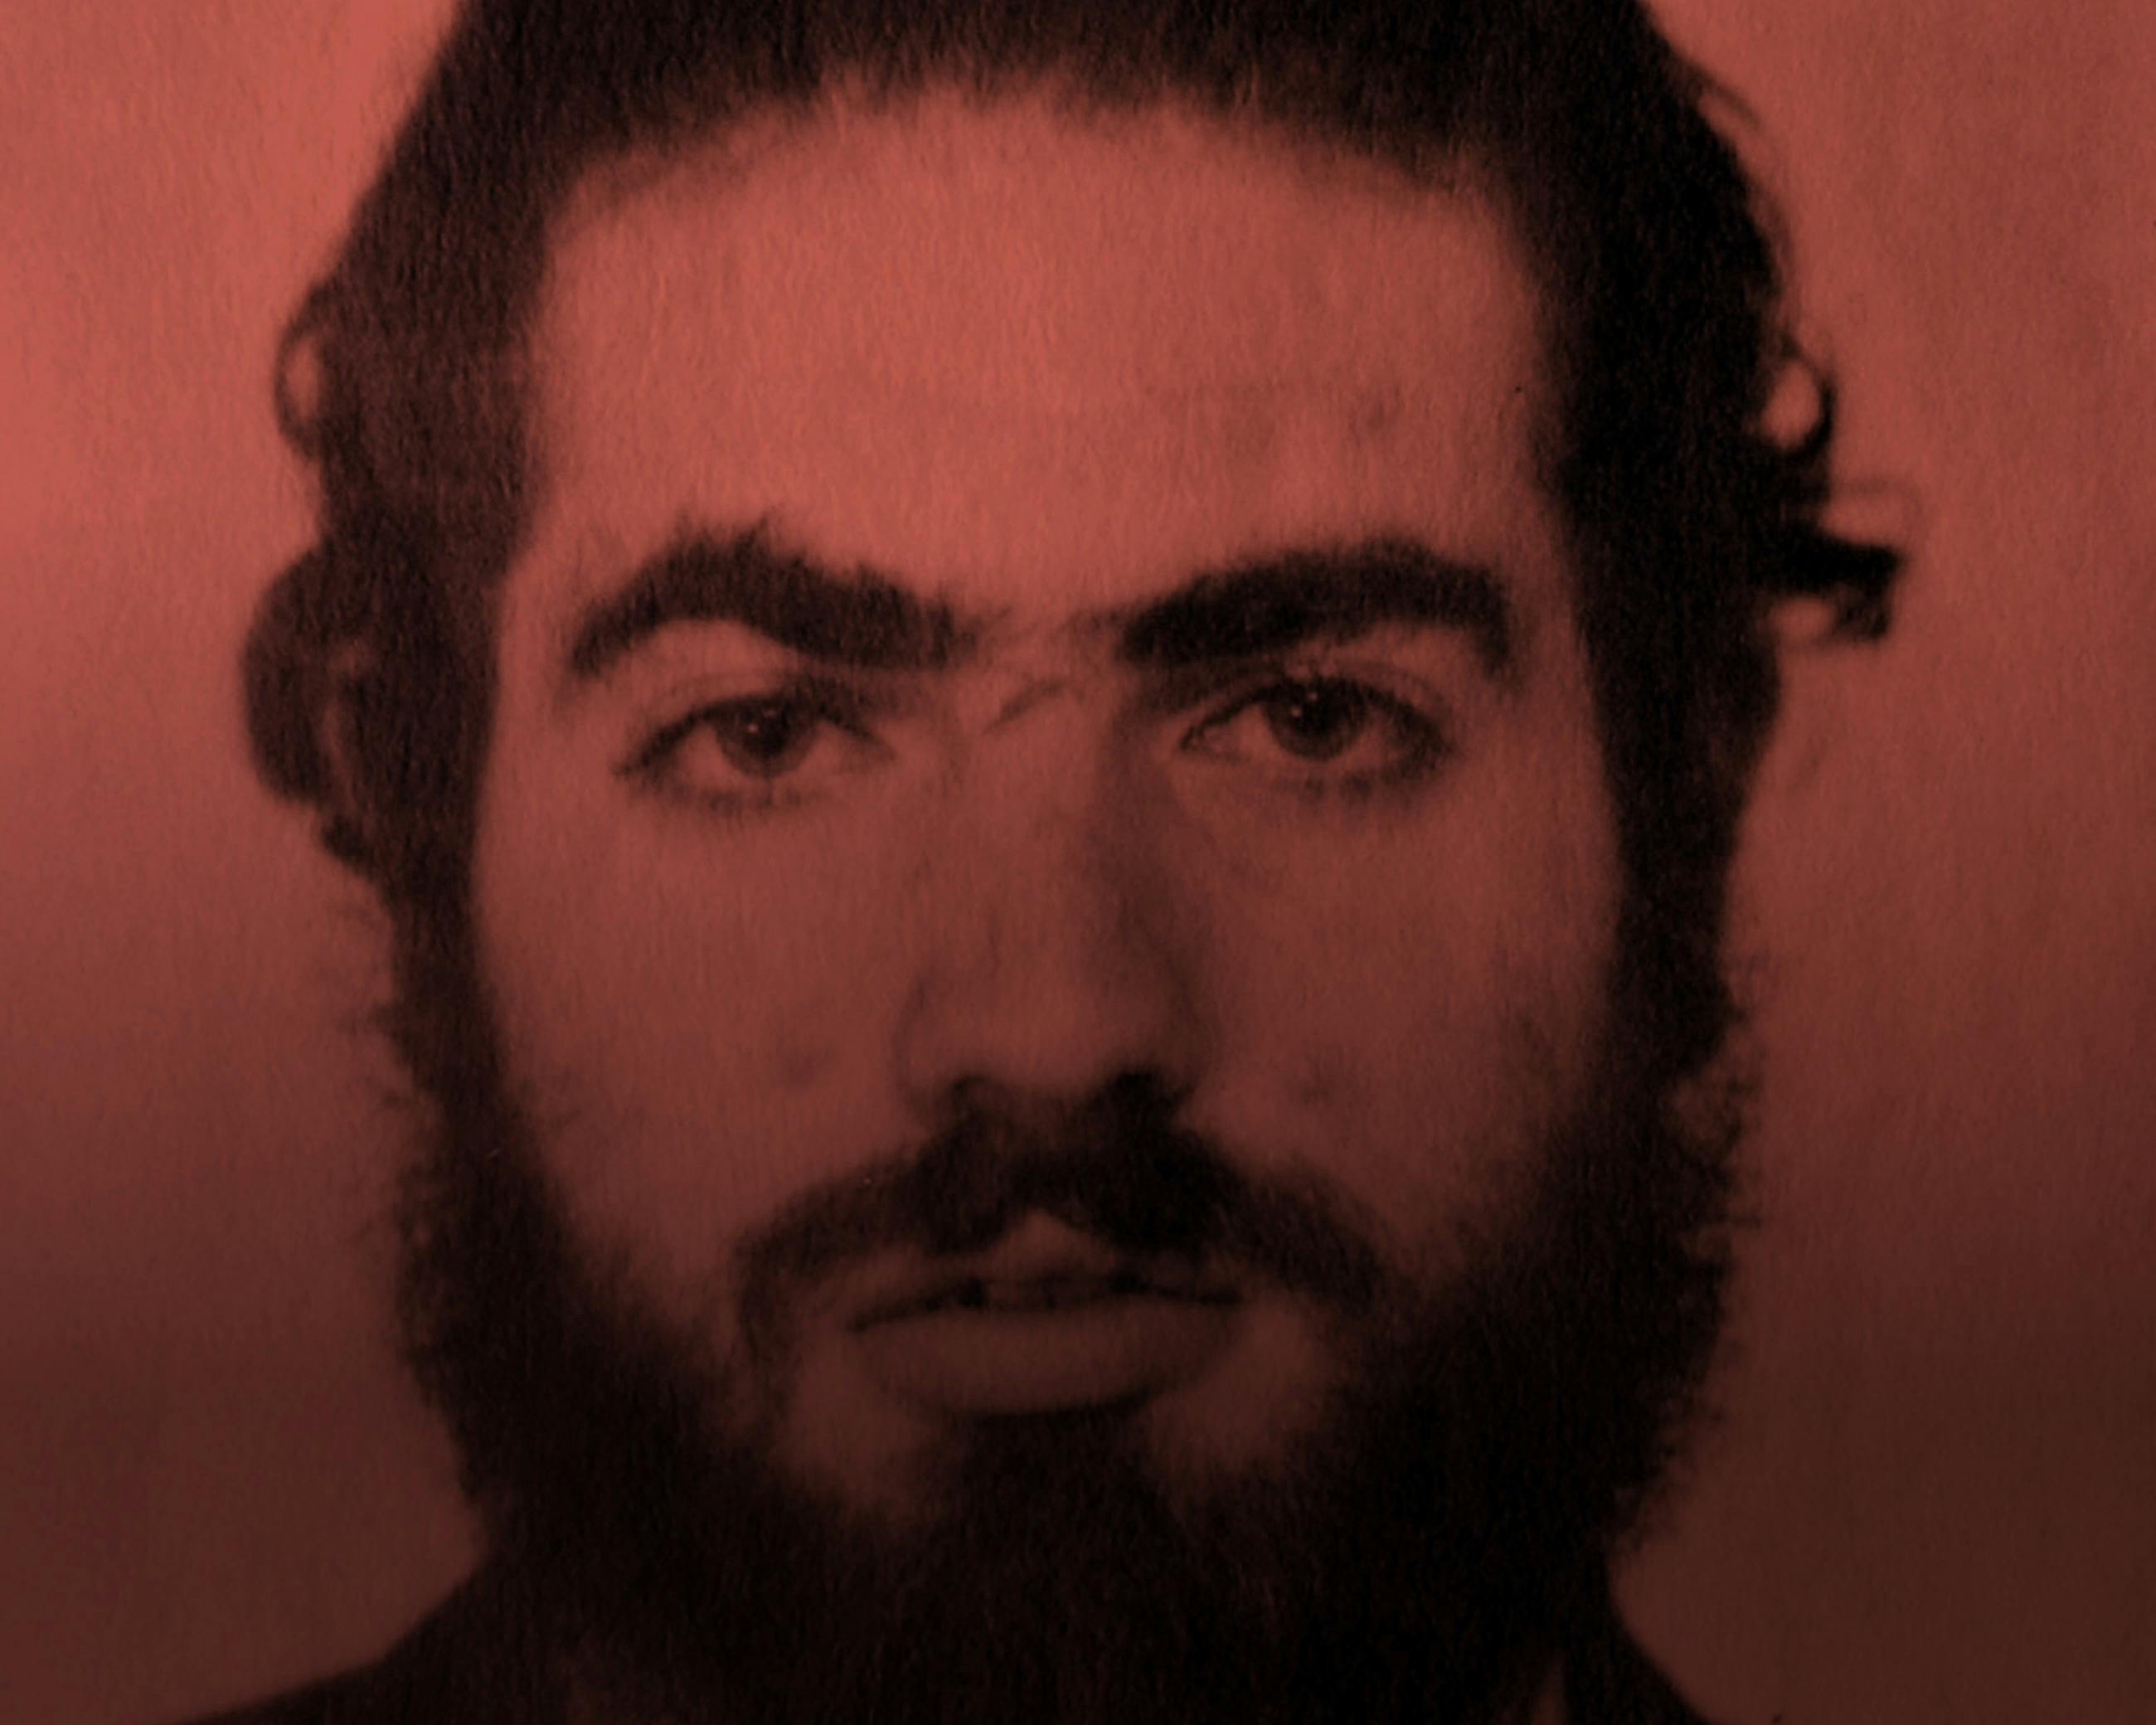 A photo portrait of Grigori Perelman